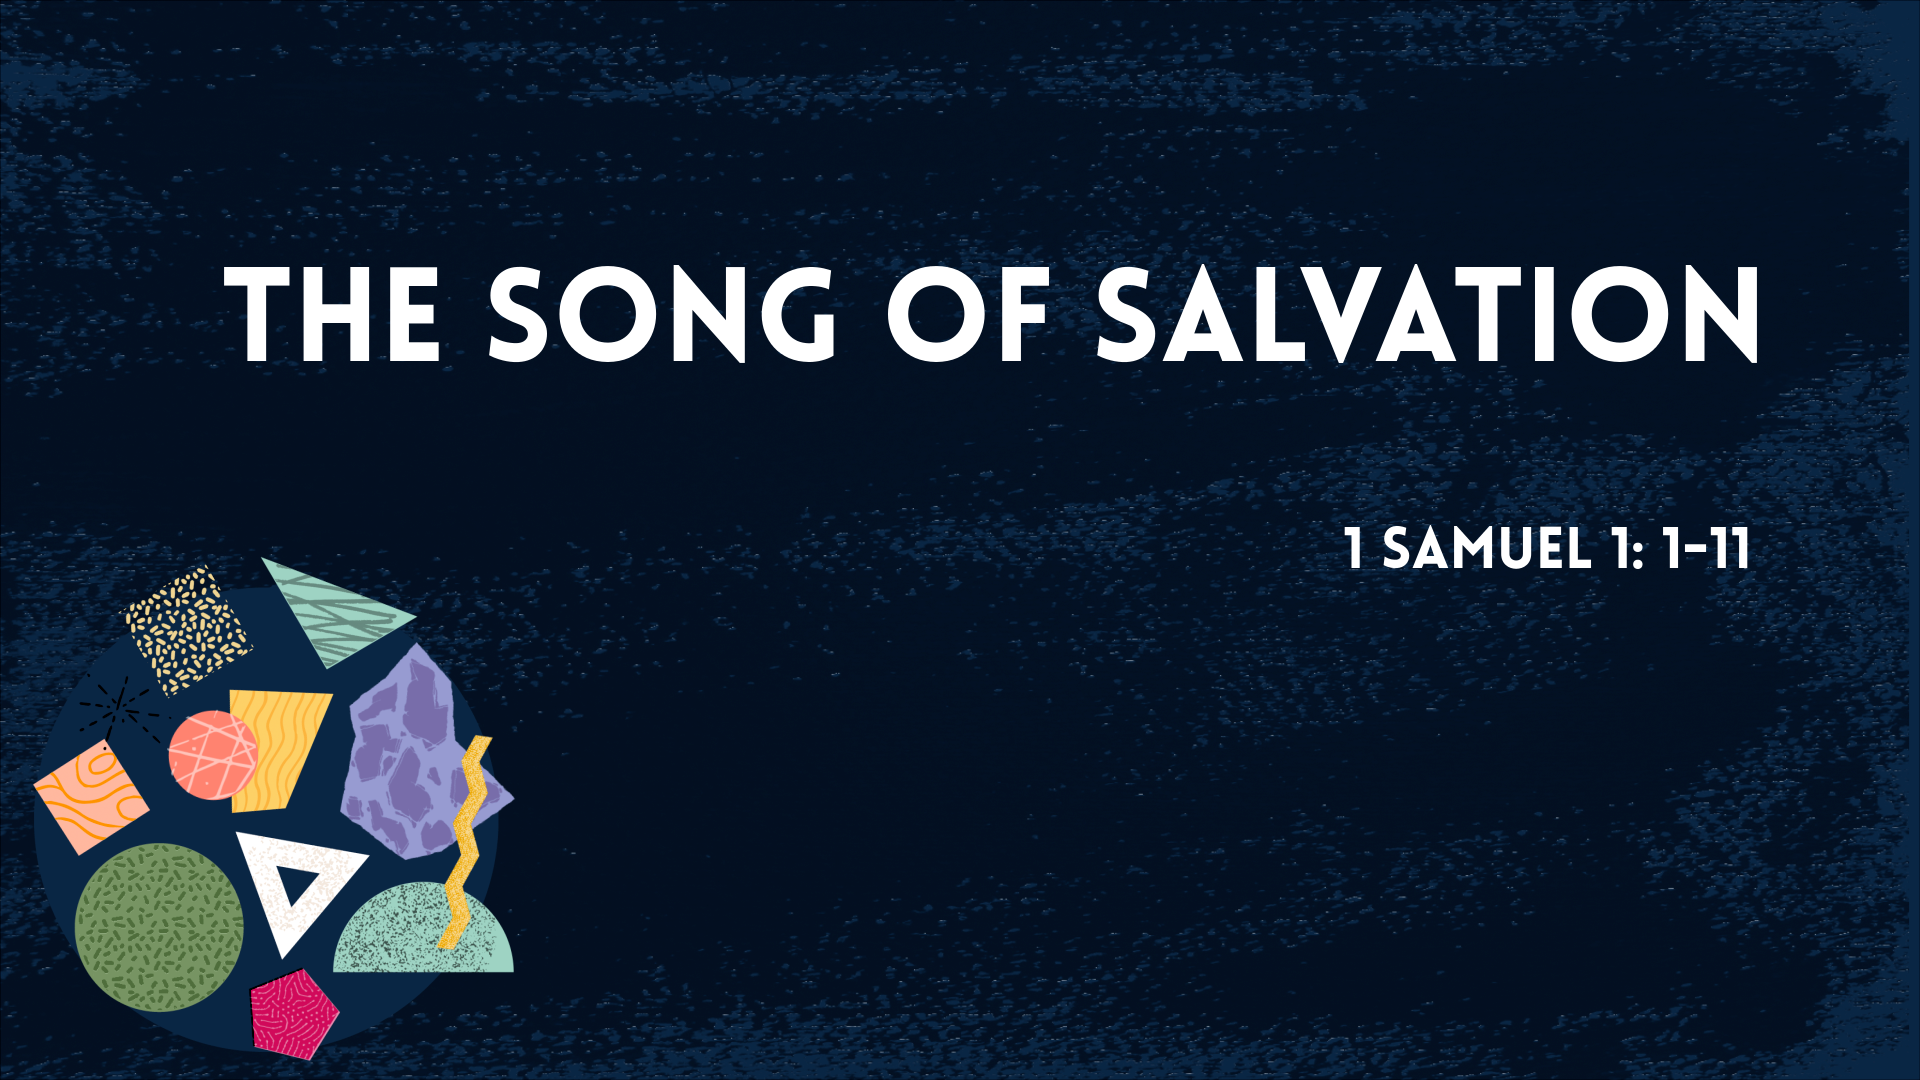 Oct 11, 2020 - The Song of Salvation (Video) - 1 Samuel 1:1-11